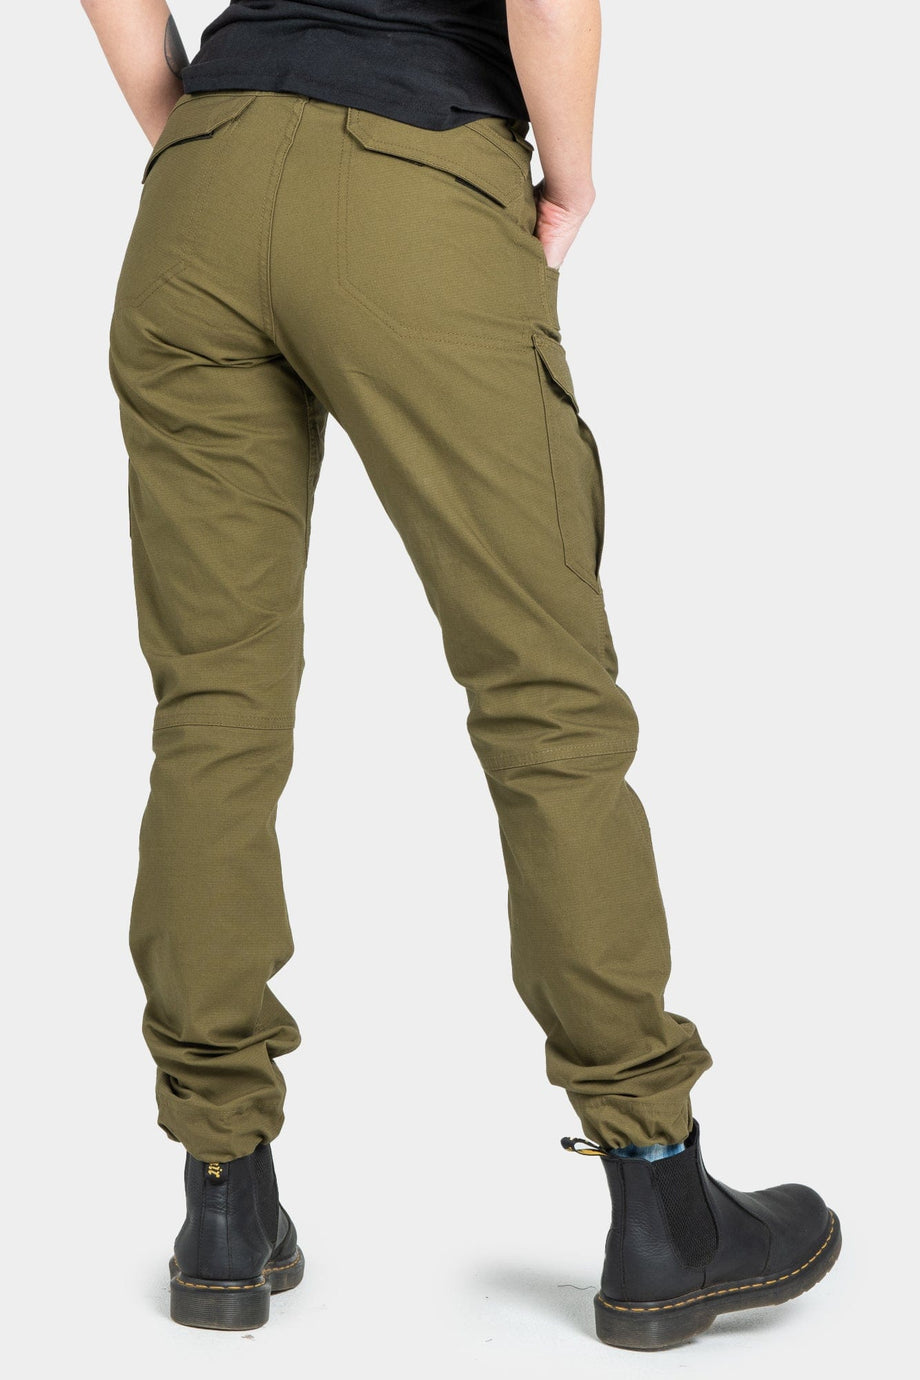 Buy Men's Voguish Green Cotton Pant Online | SNITCH